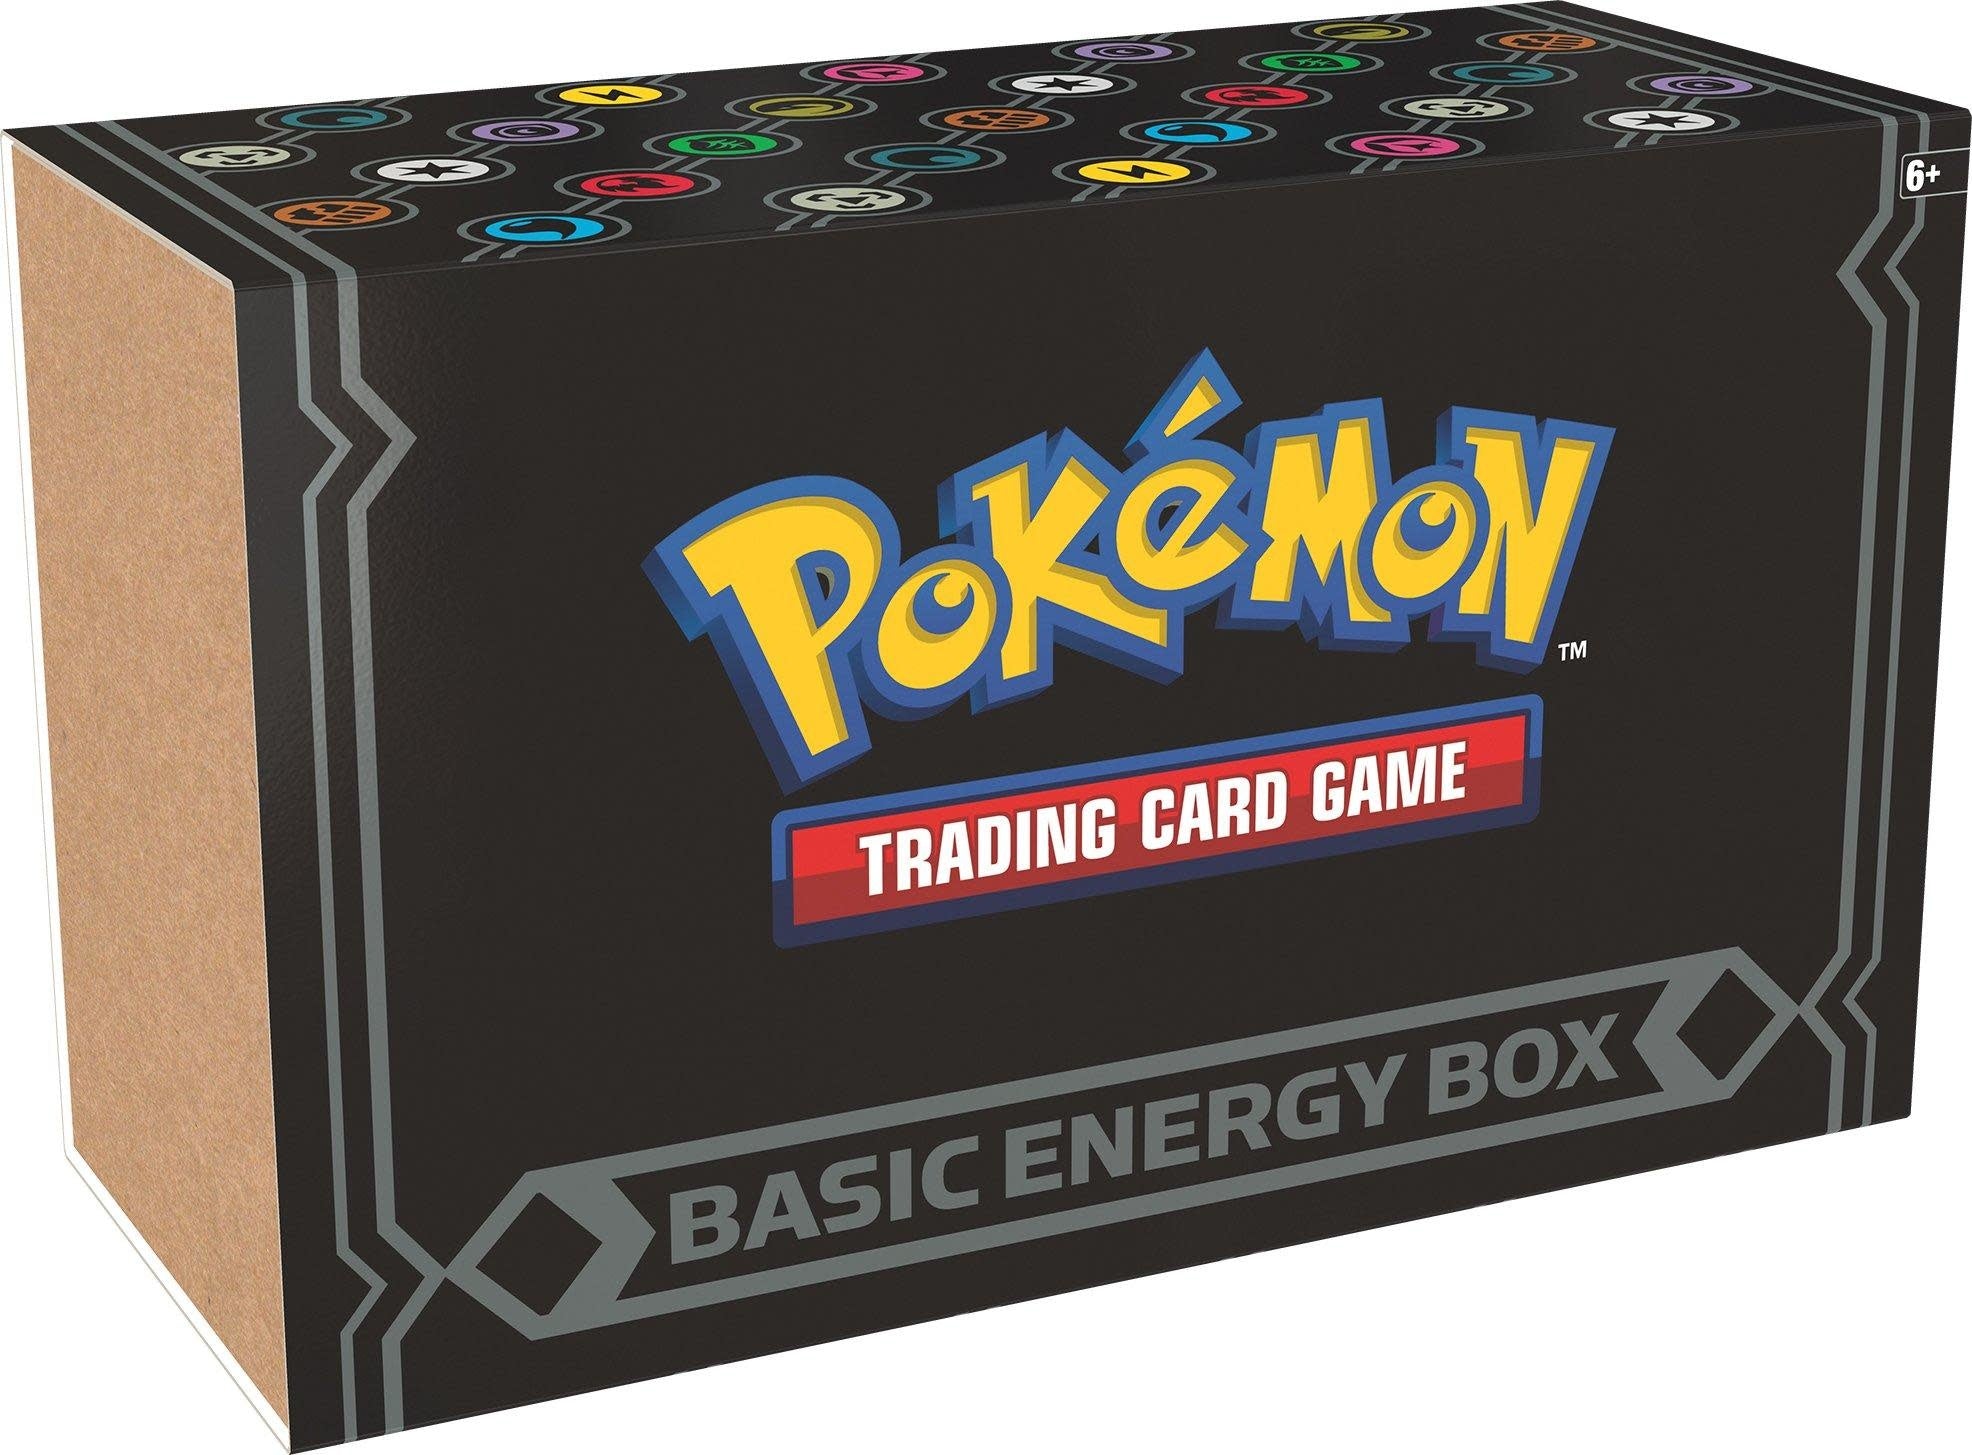 Basic Energy Box | Total Play